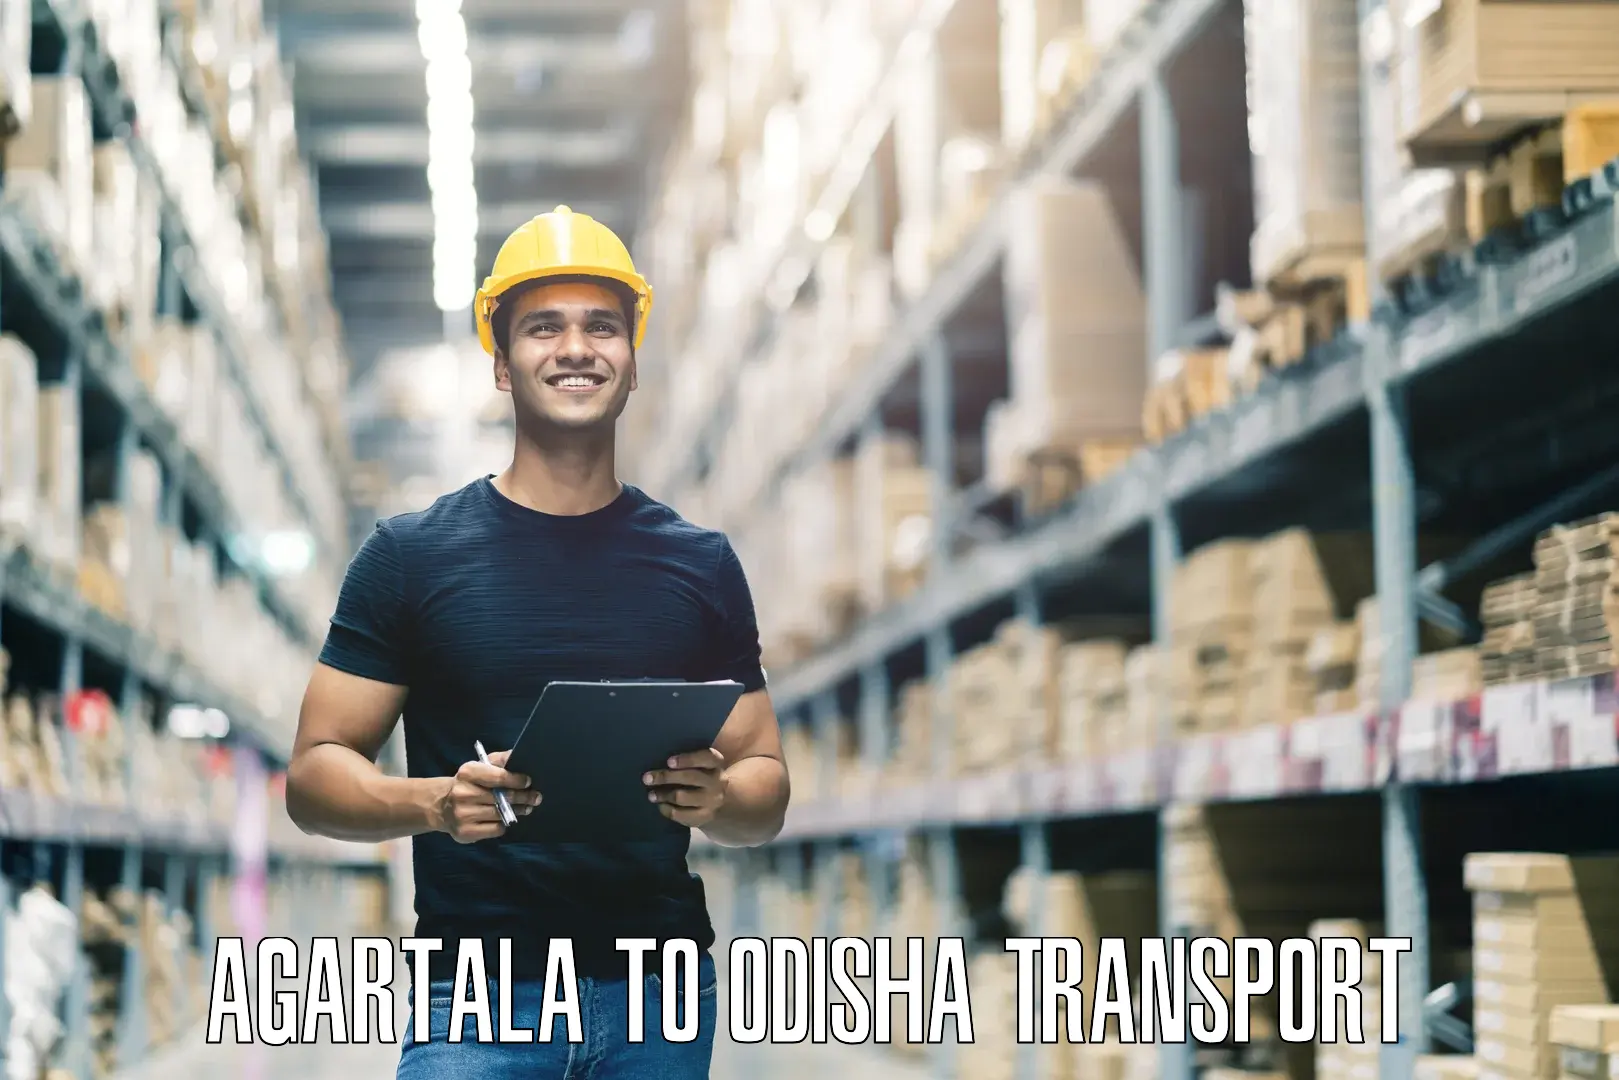 Shipping partner Agartala to Champua